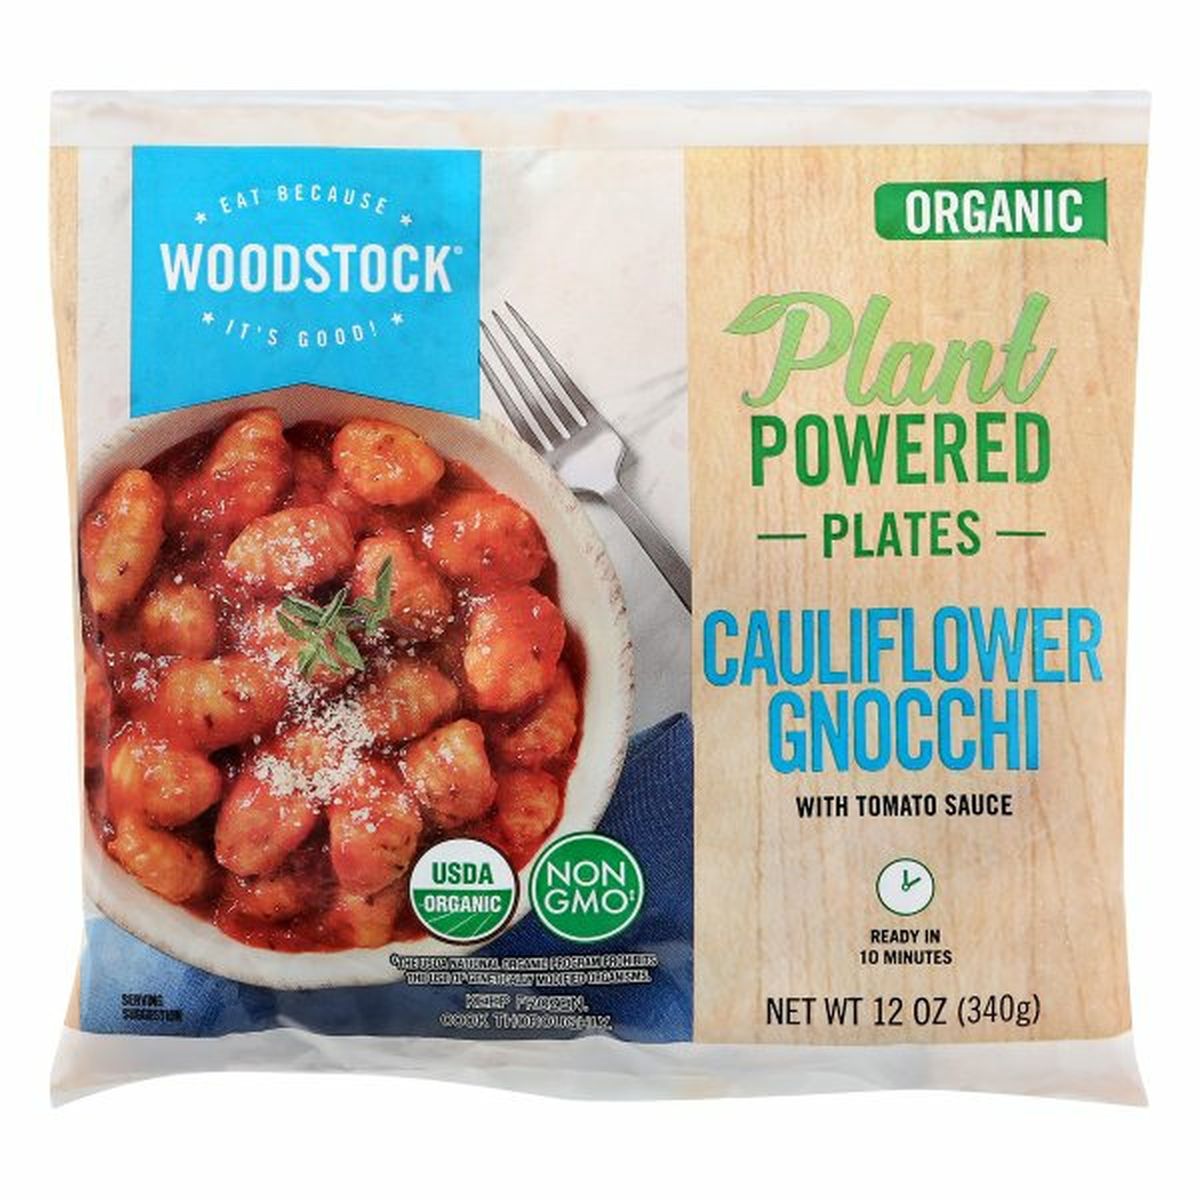 Calories in WOODSTOCK Cauliflower Gnocchi, Organic, Plant Powered Plates